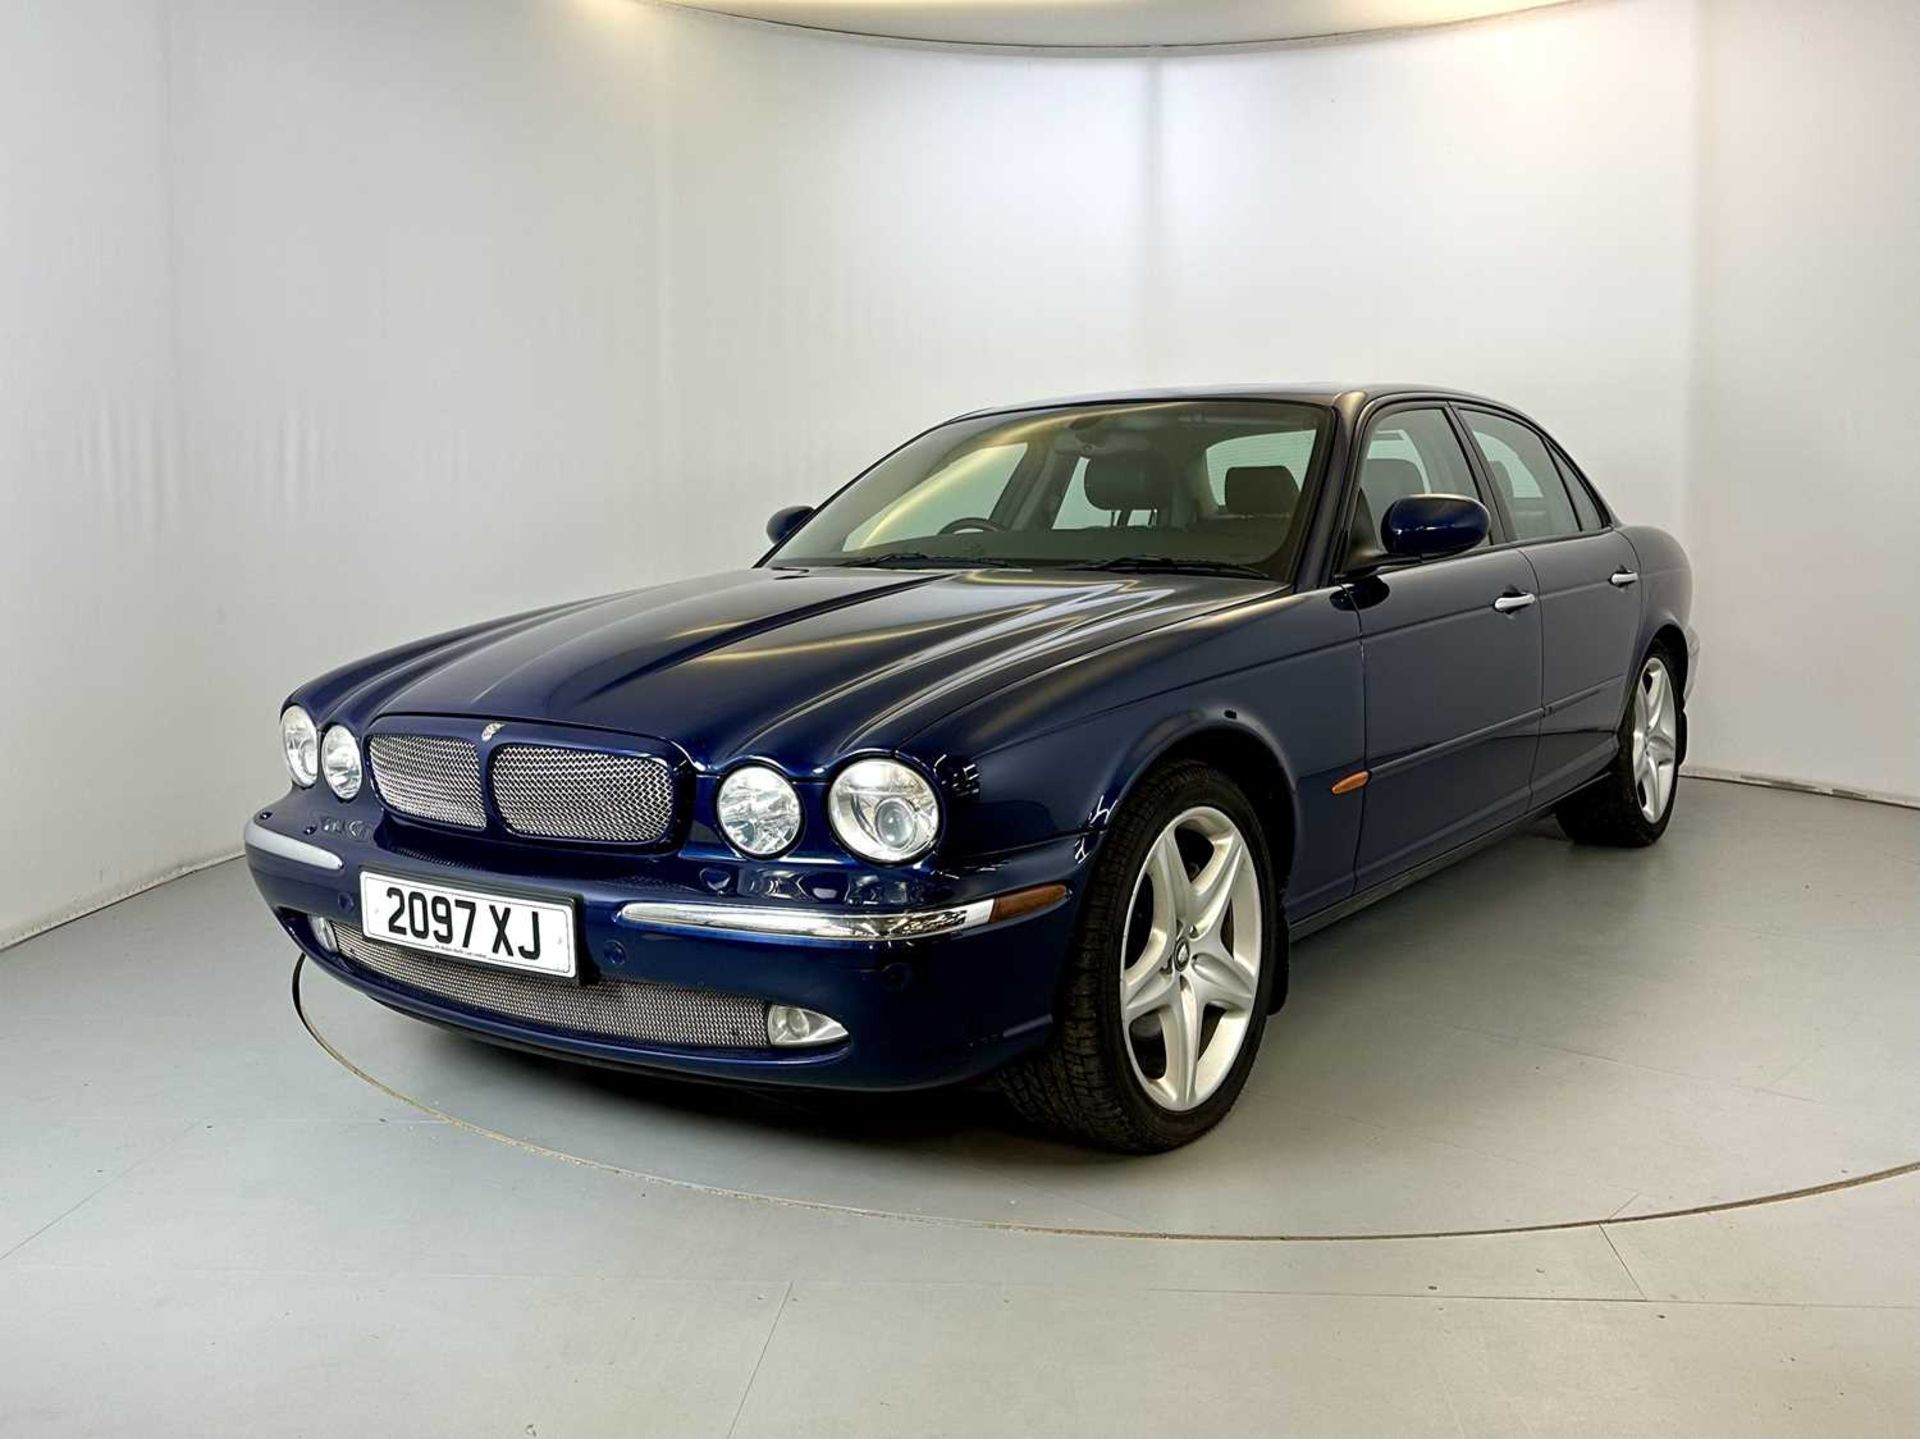 2003 Jaguar XJ Sport - Image 3 of 33